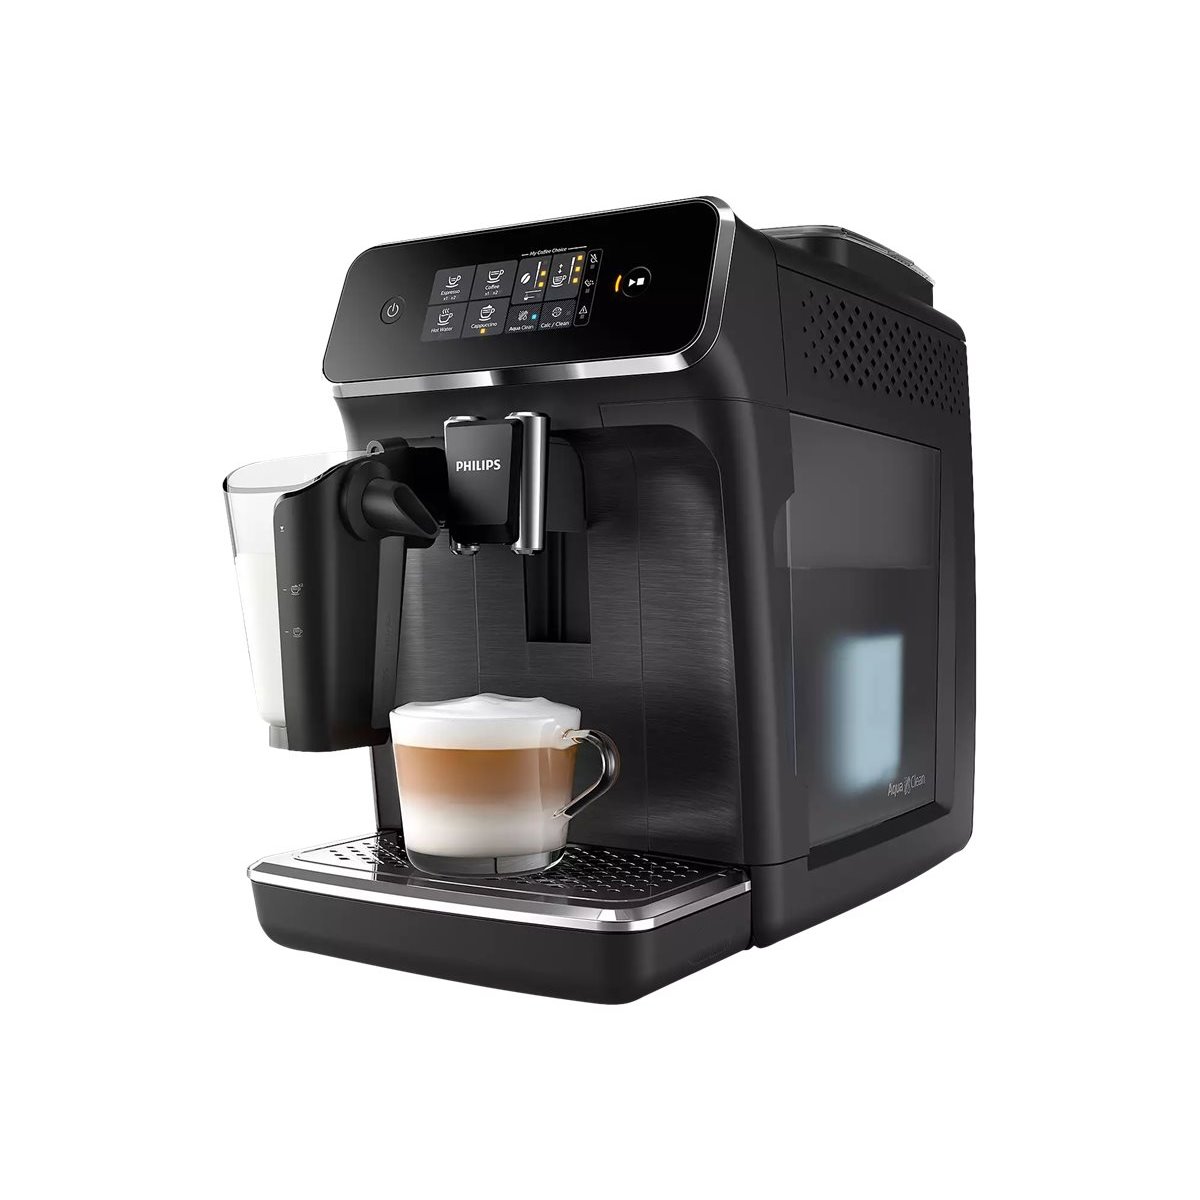 Philips Series 2200 EP2232-40 - Combi coffee maker - 1.8 L - Coffee beans - Built-in grinder - 1500 W - Black